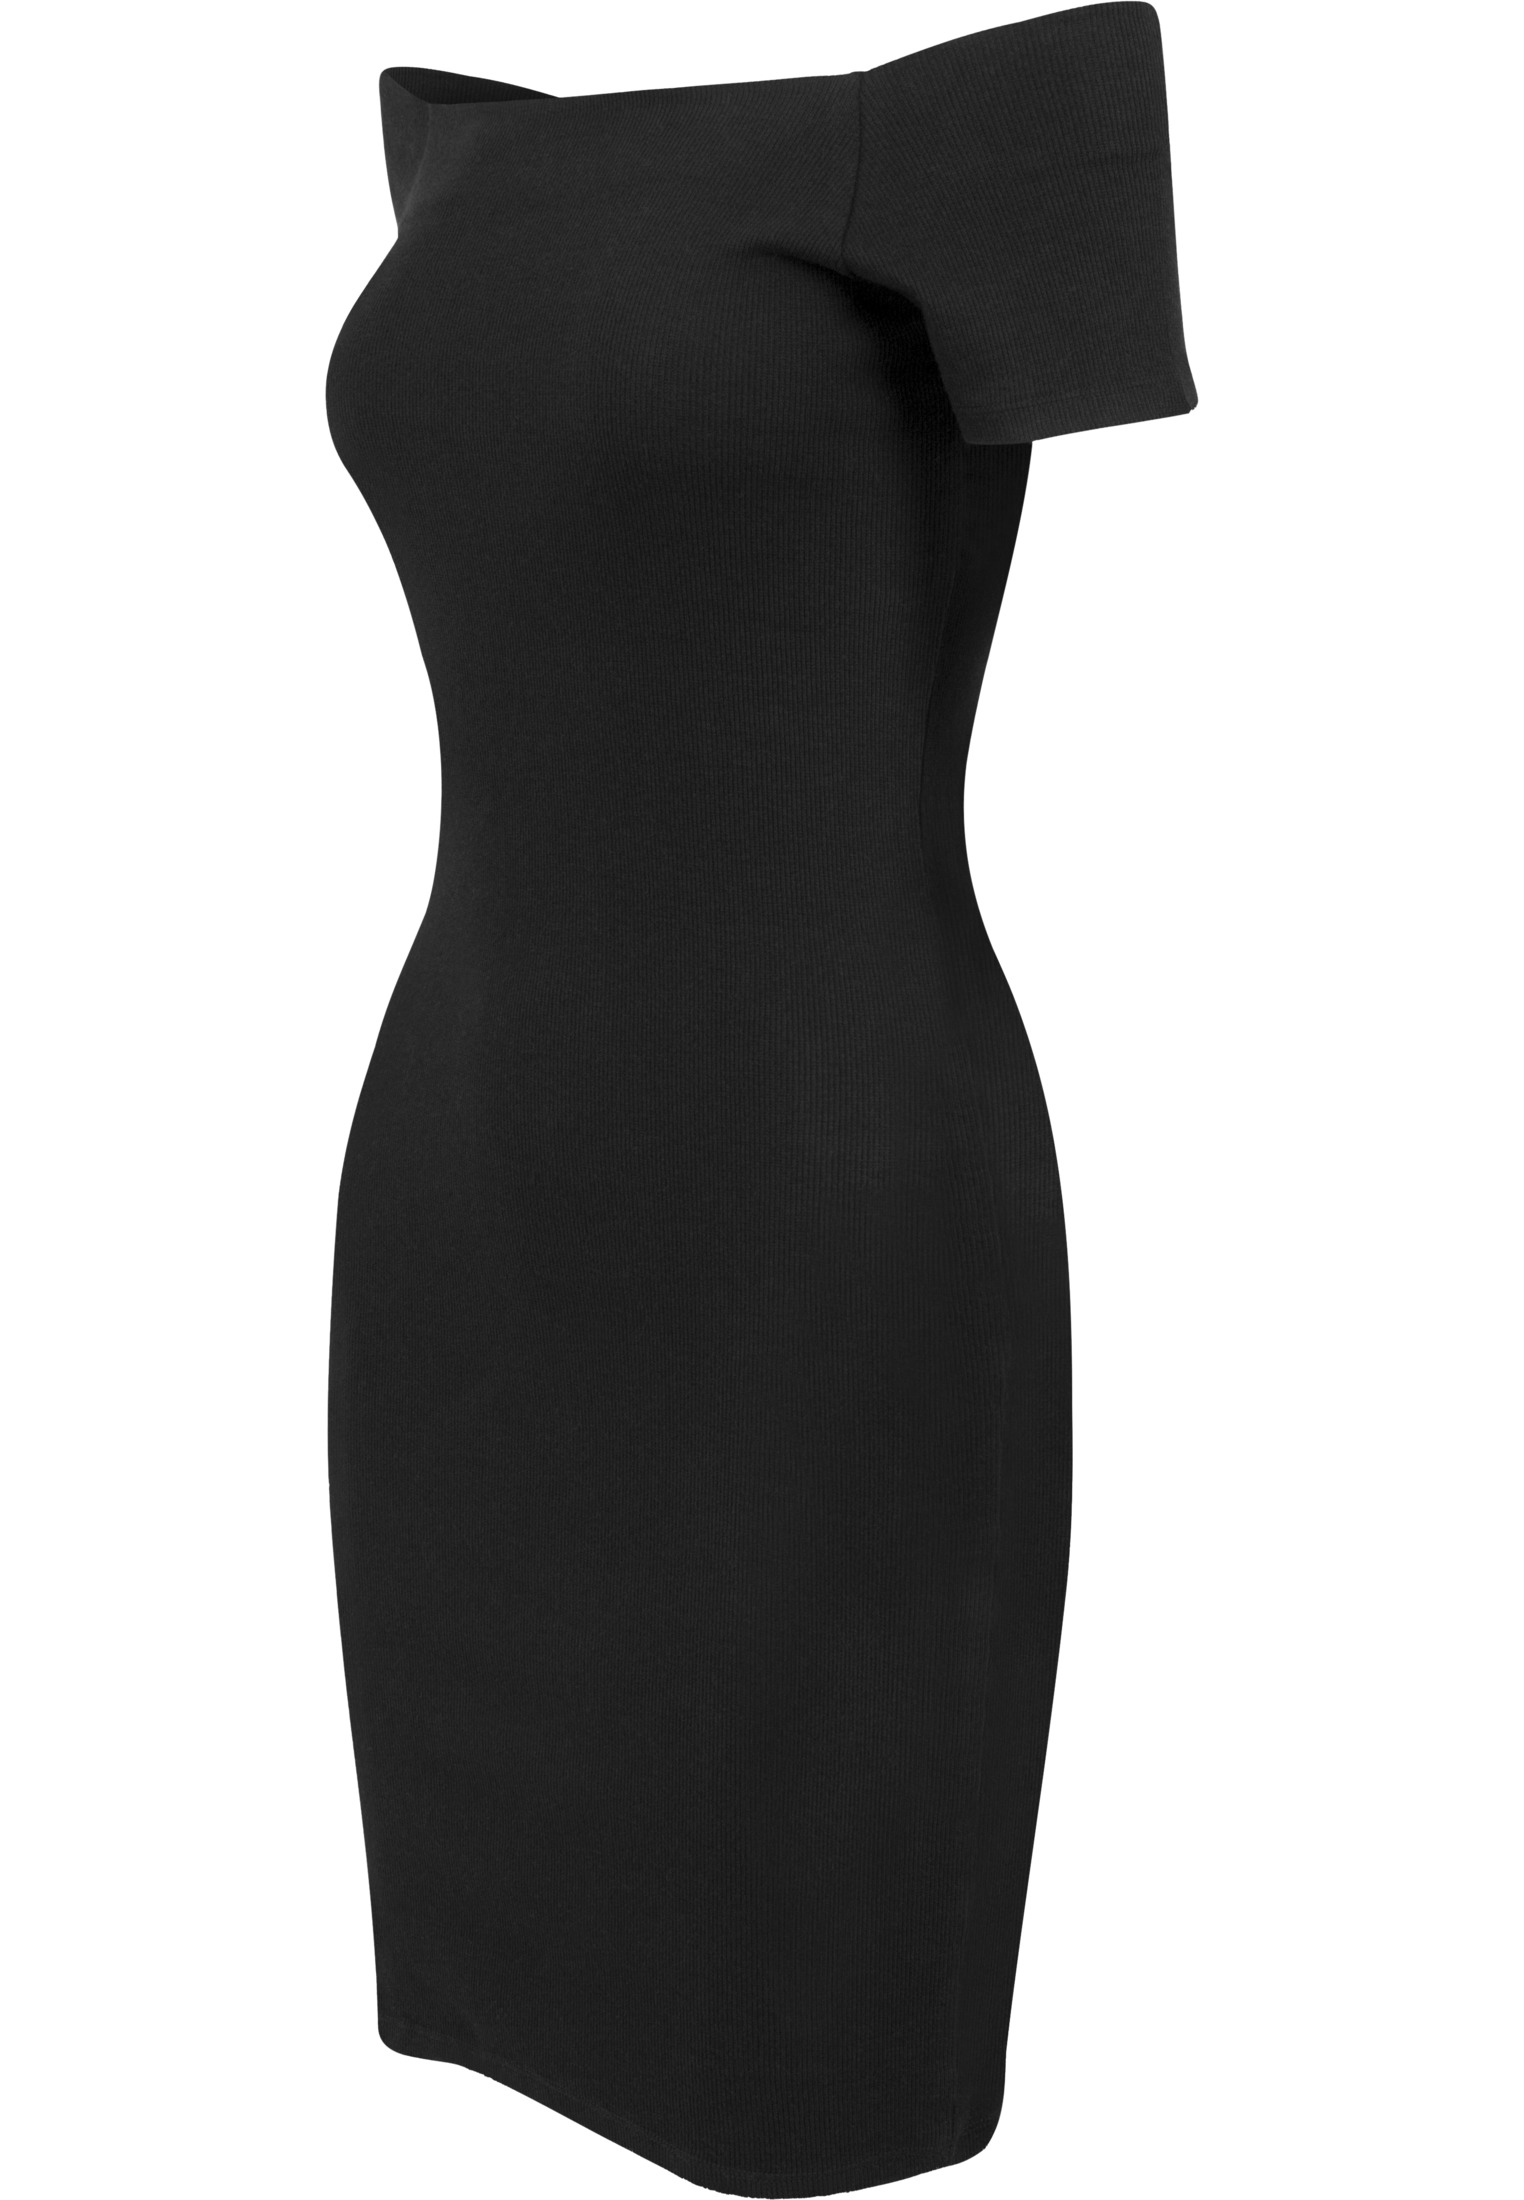 Kleider & R?cke Ladies Off Shoulder Rib Dress in Farbe black